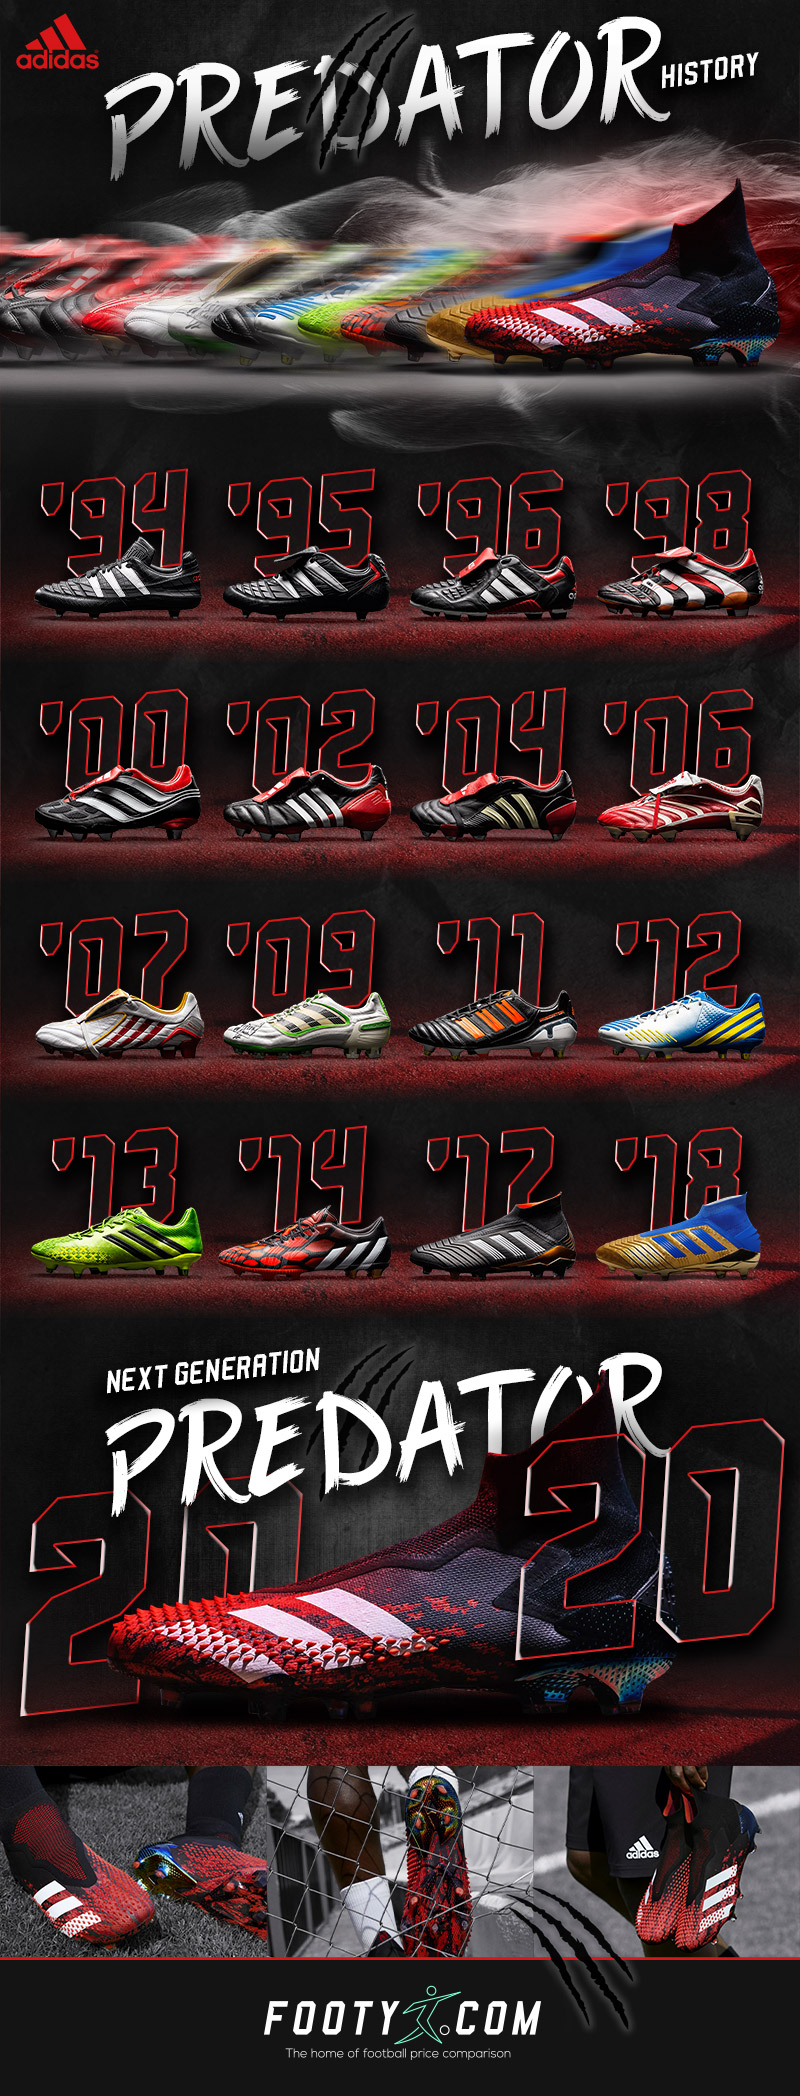 adidas predator through the years